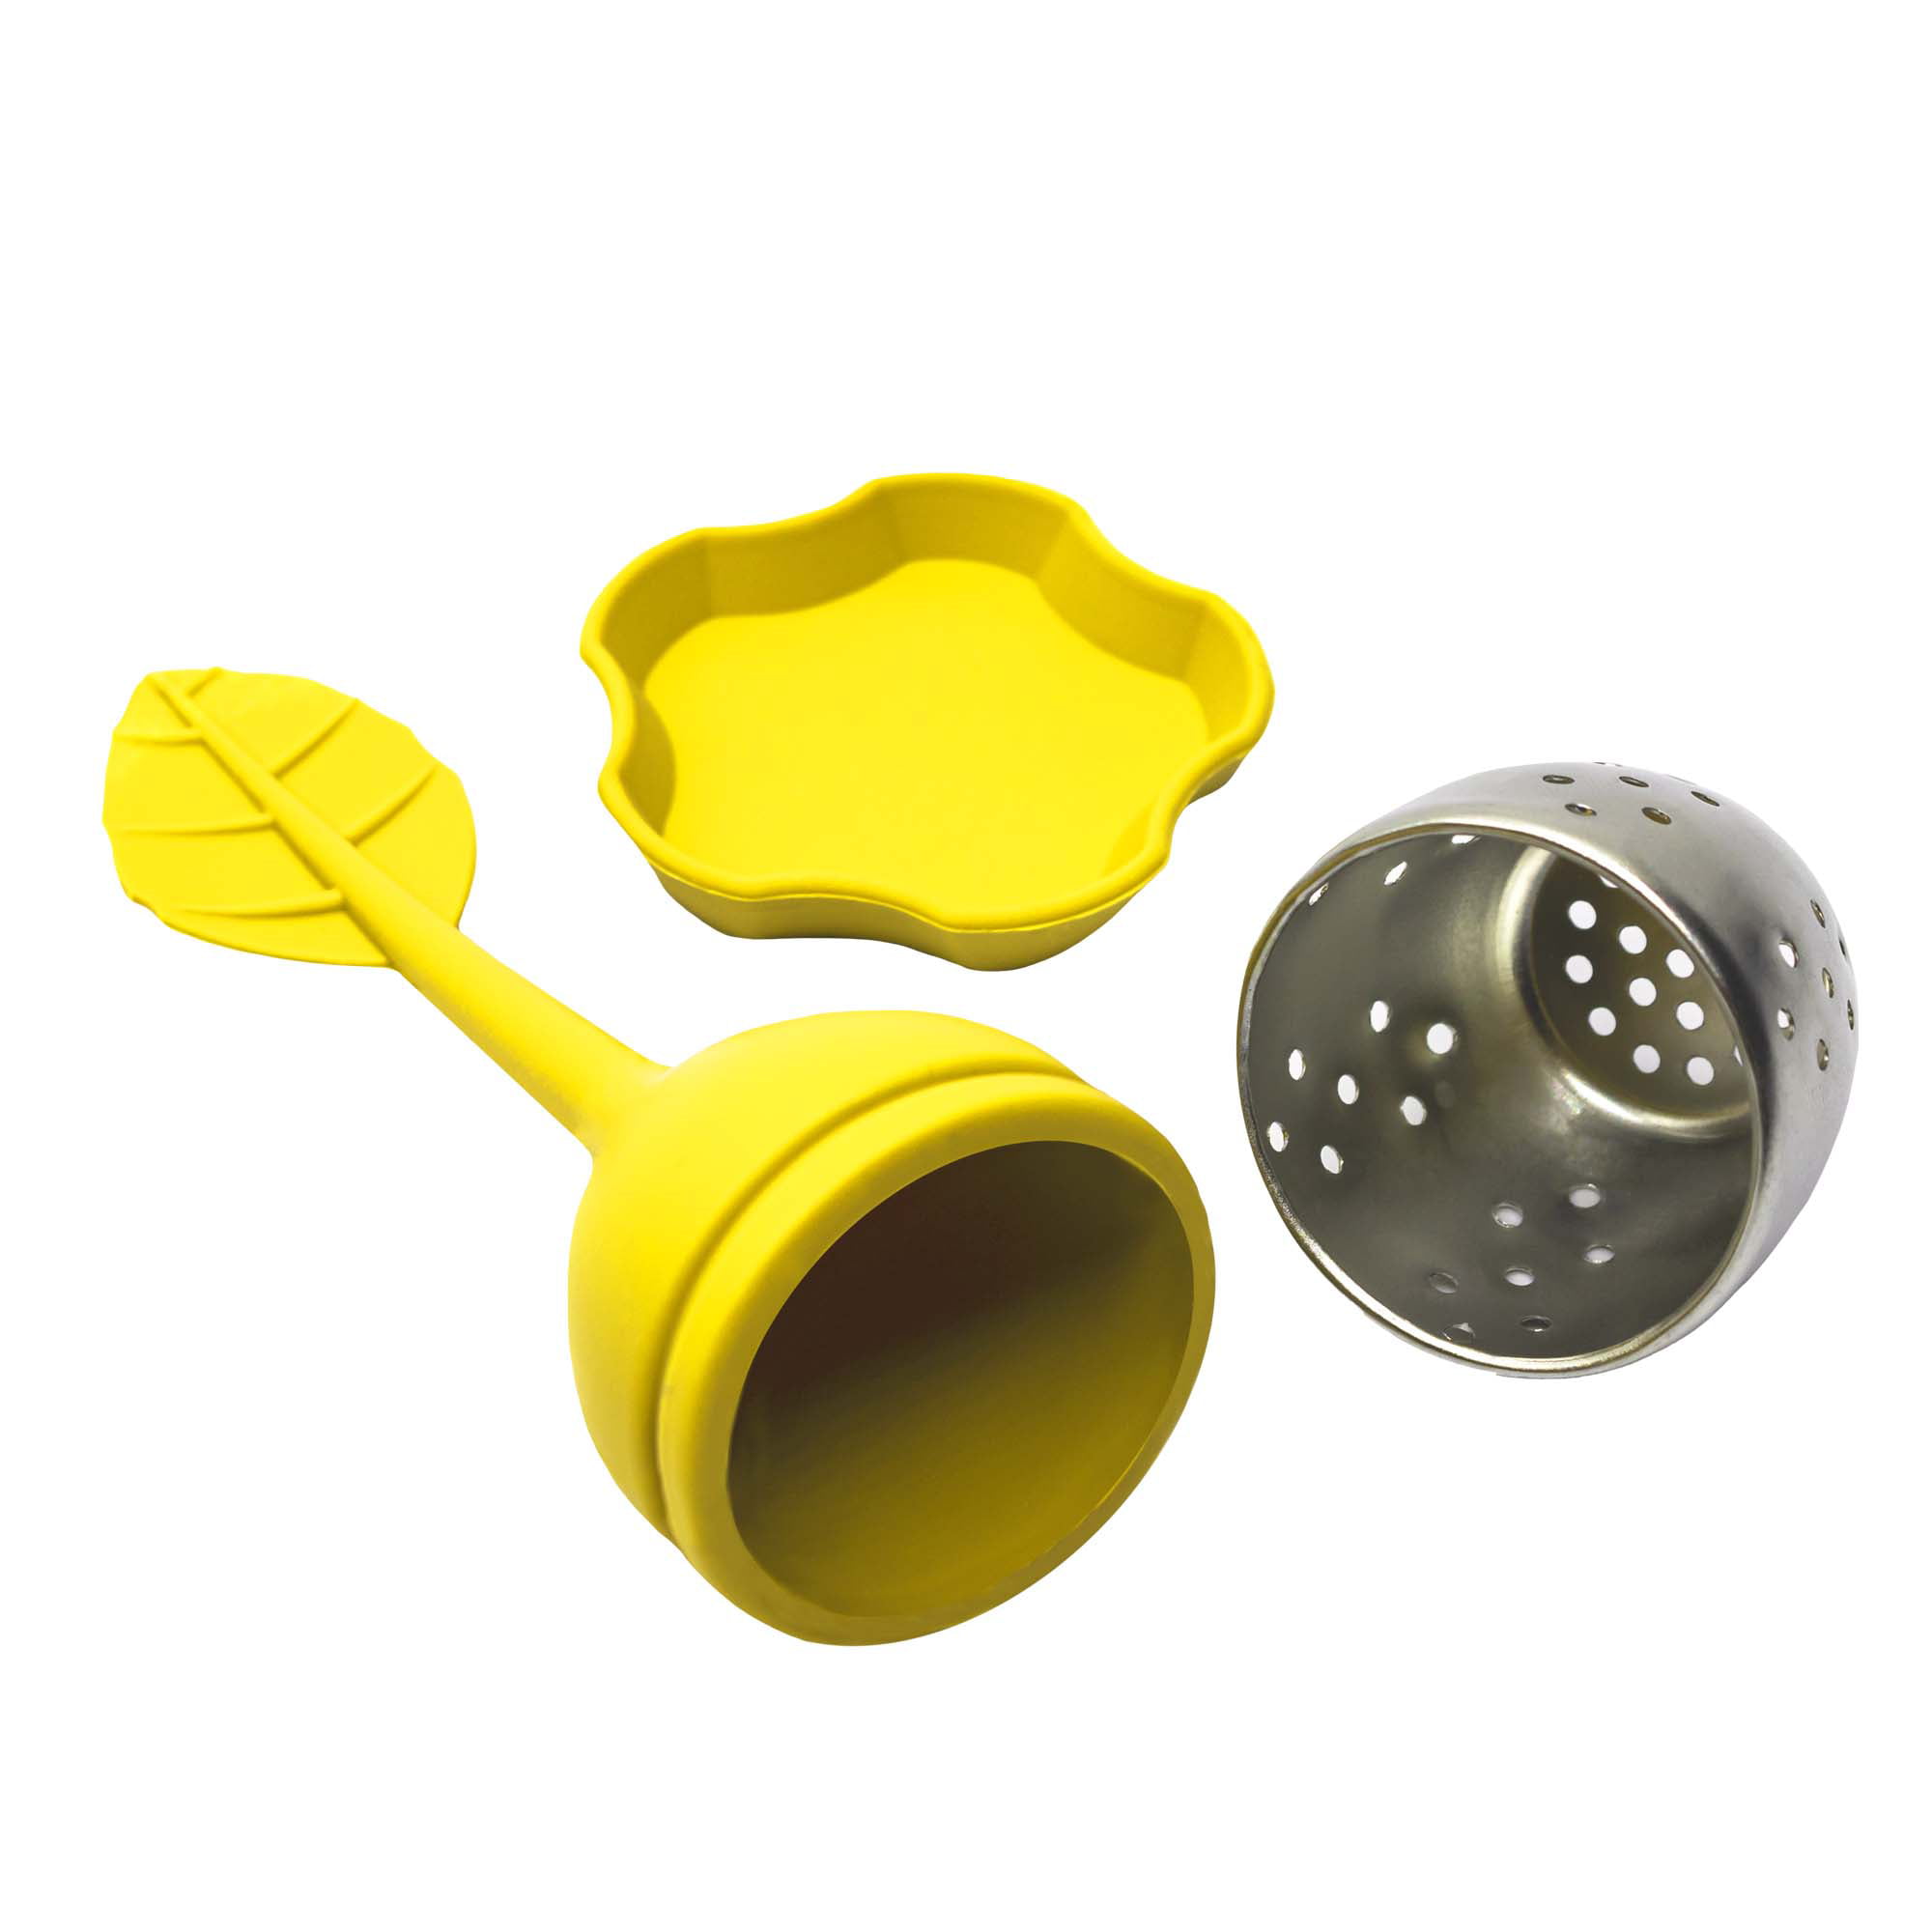 Tuffy Tea Steeper - Travel Tea Infuser, Silicone Tea Basket